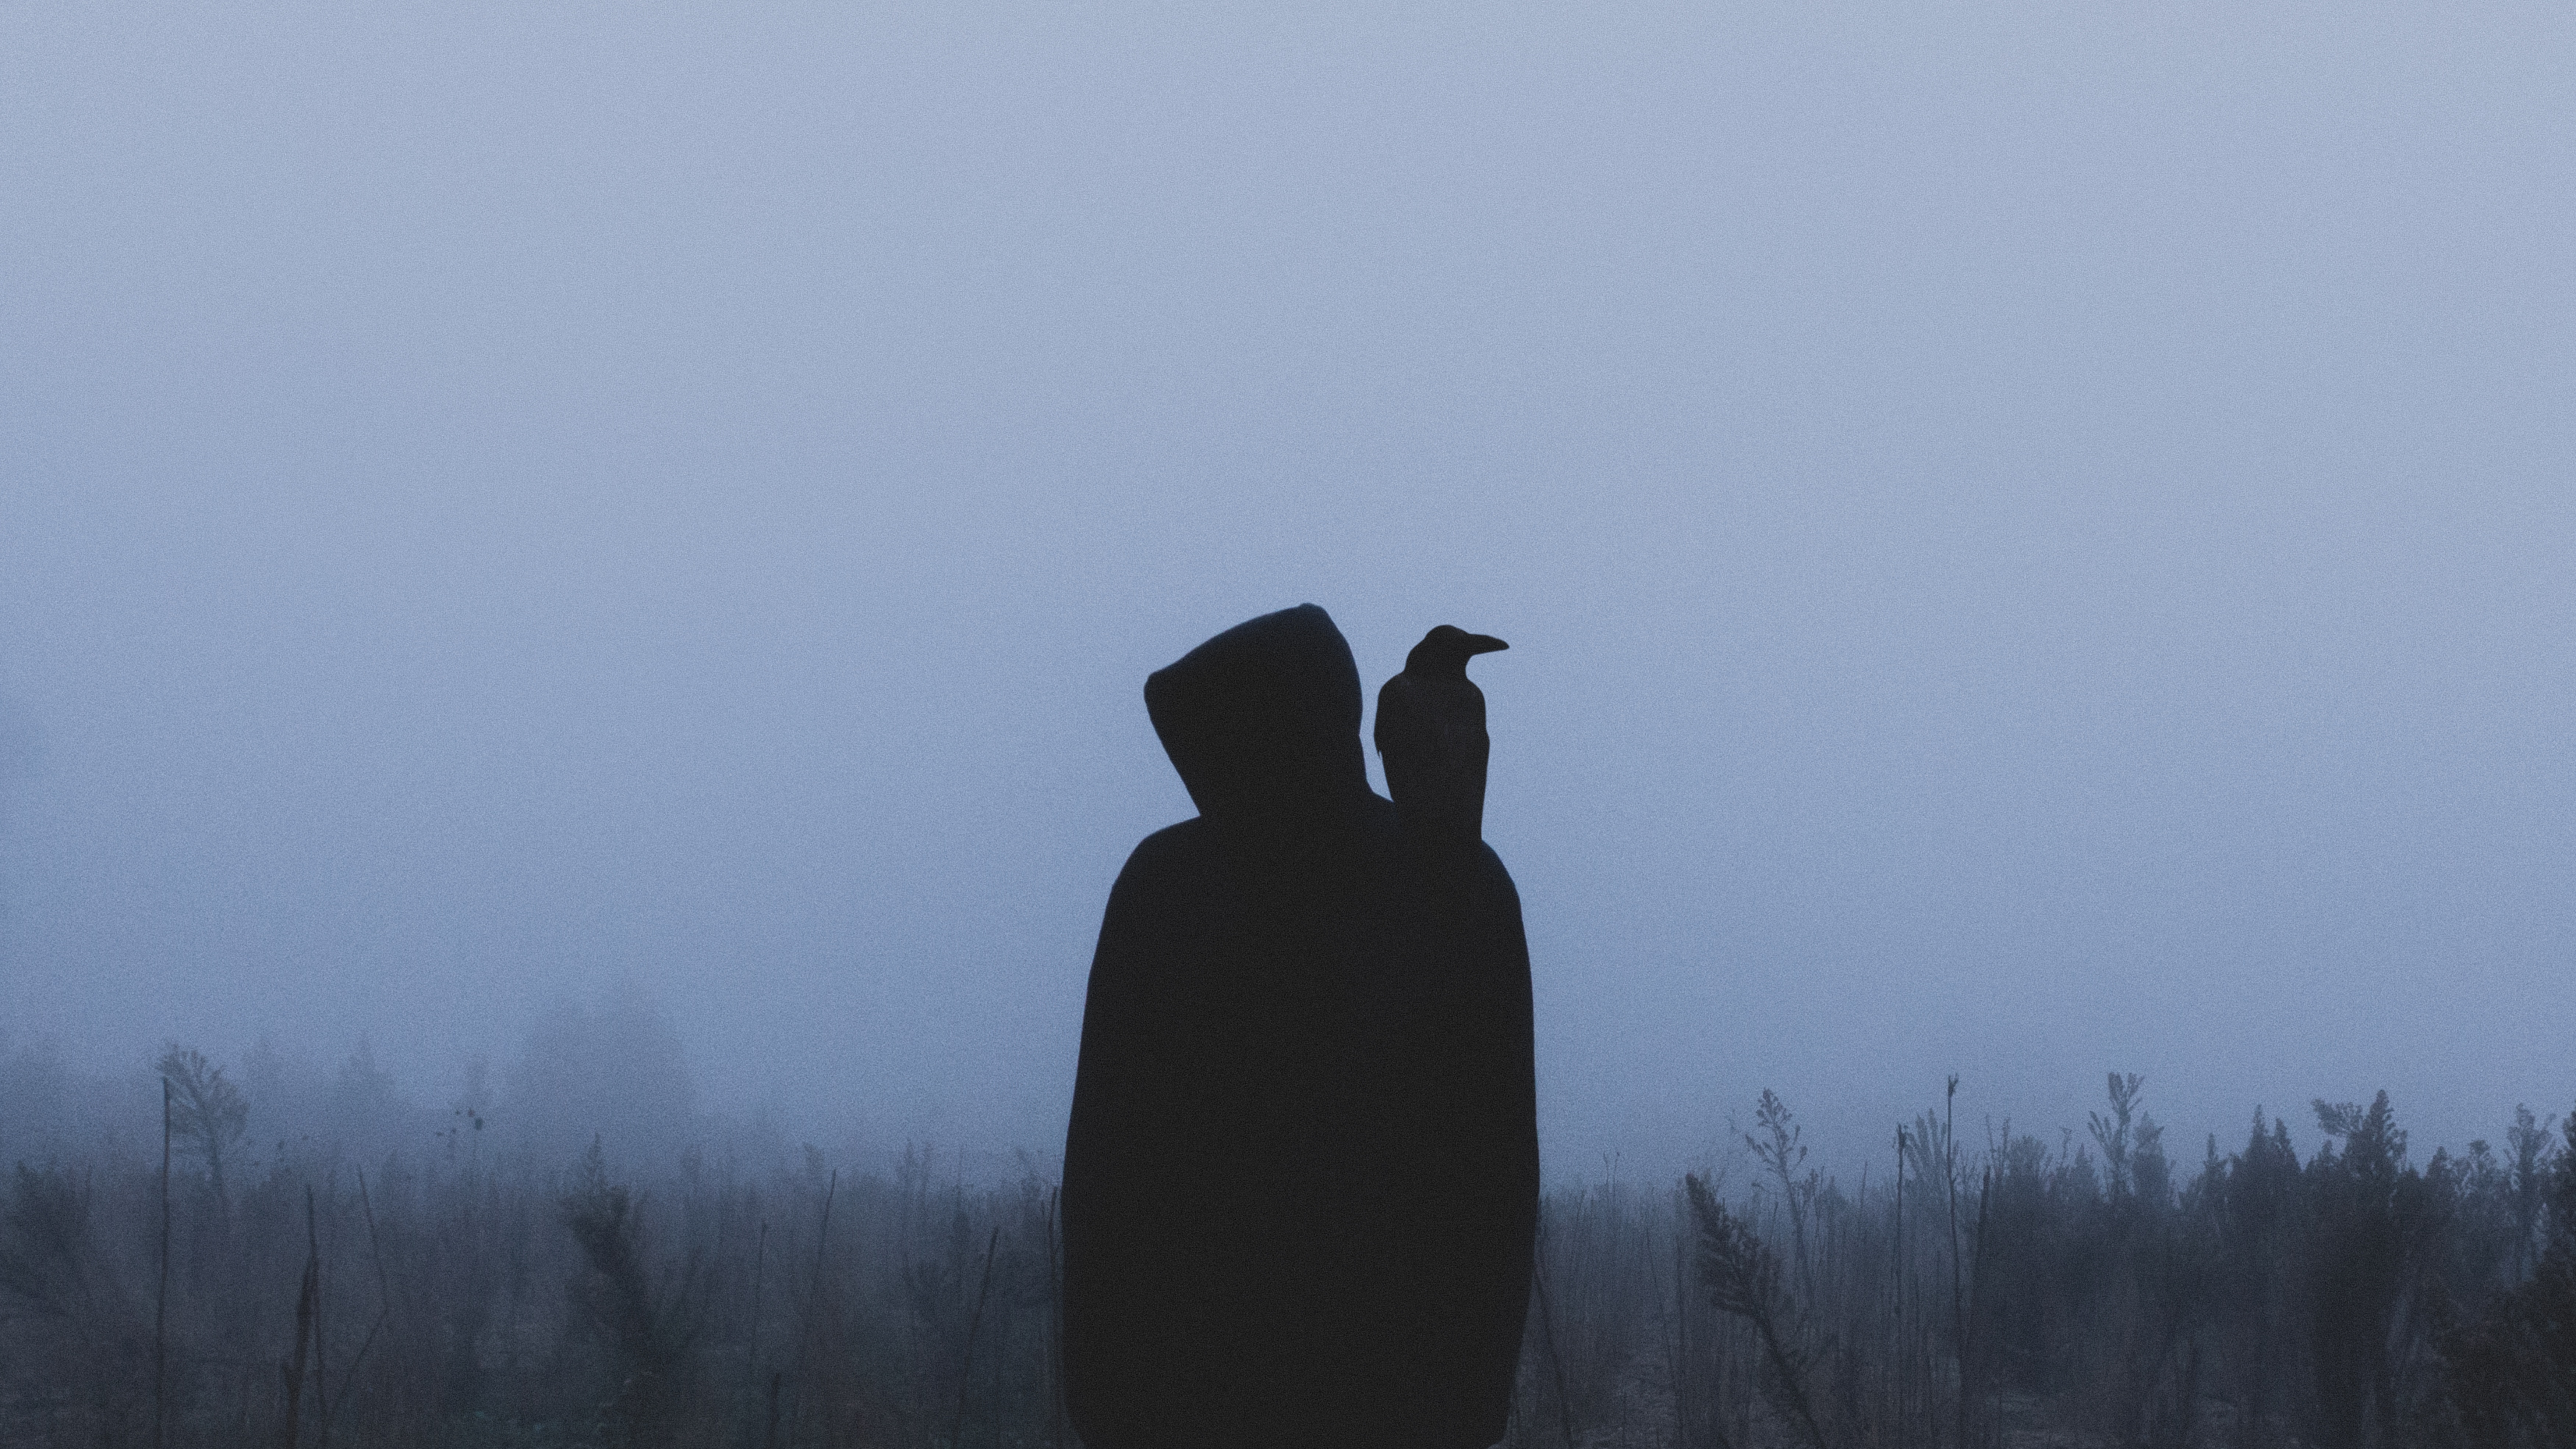 raven, hood, fog, loneliness, silhouette, miscellanea, miscellaneous